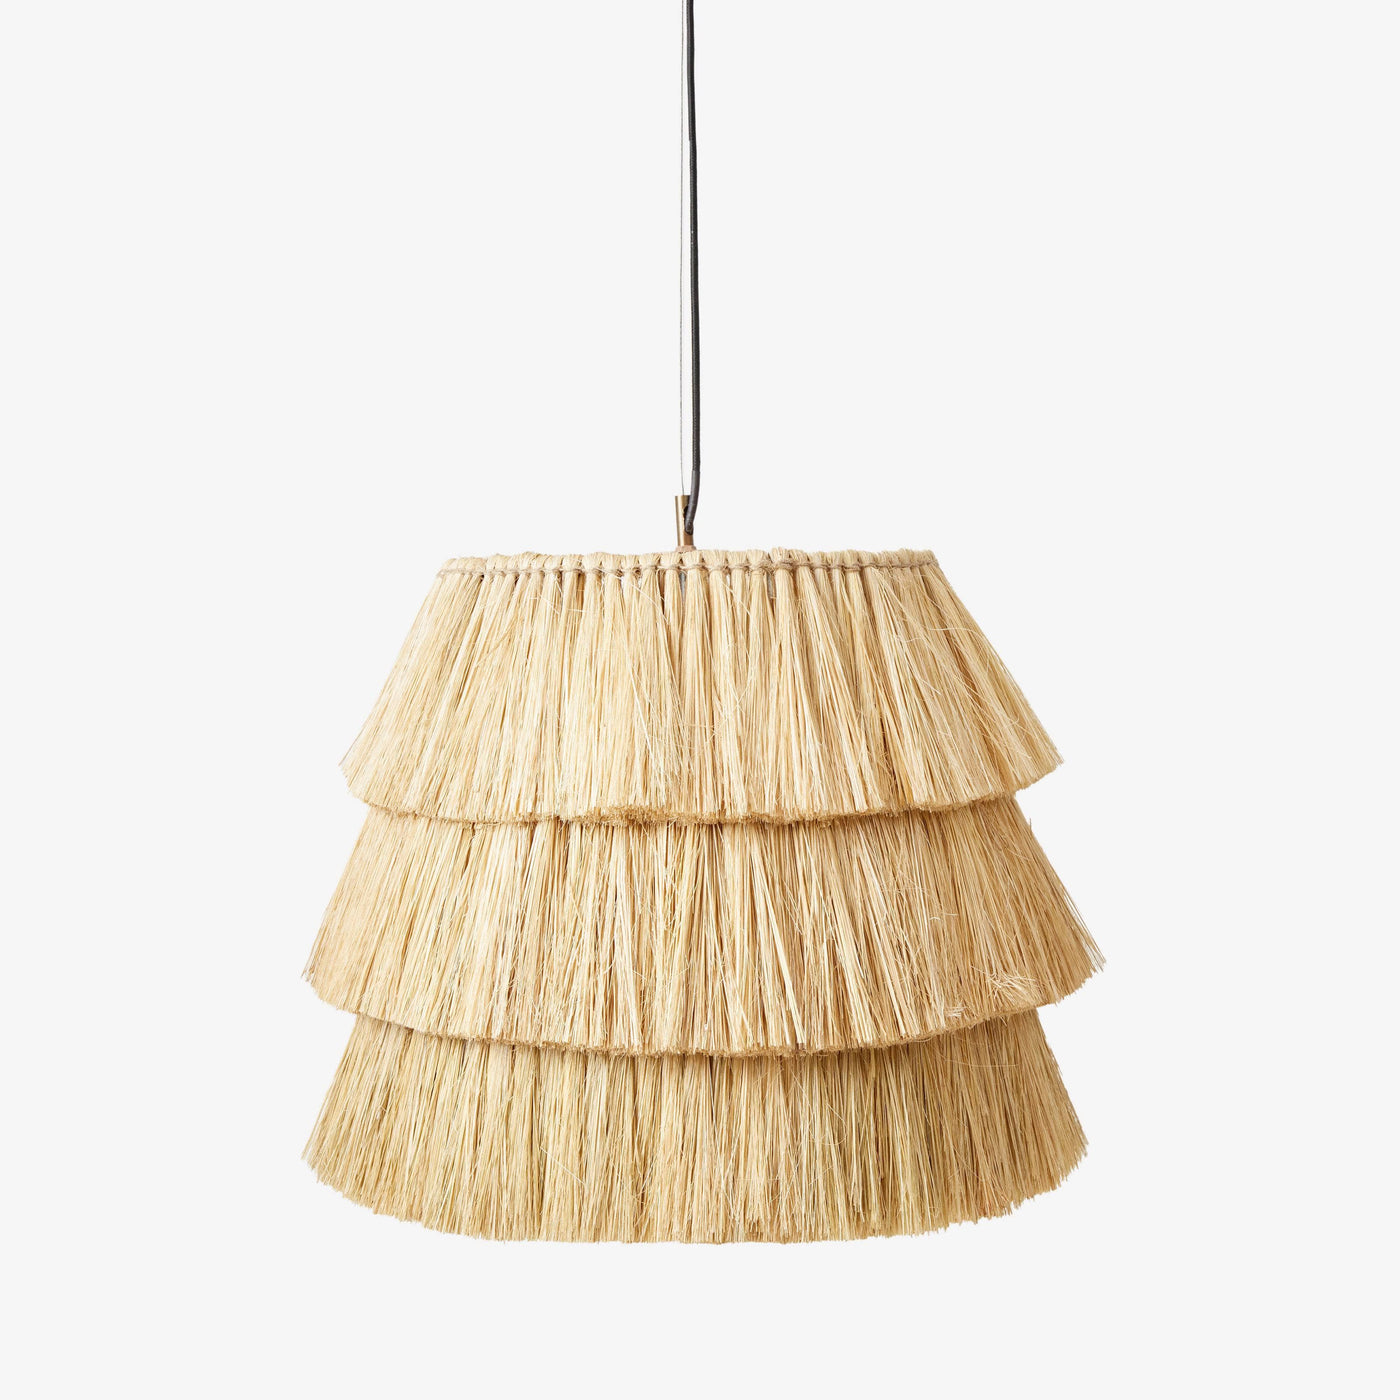 Foonse Pendant Lamp, Natural Ceiling Lighting sazy.com